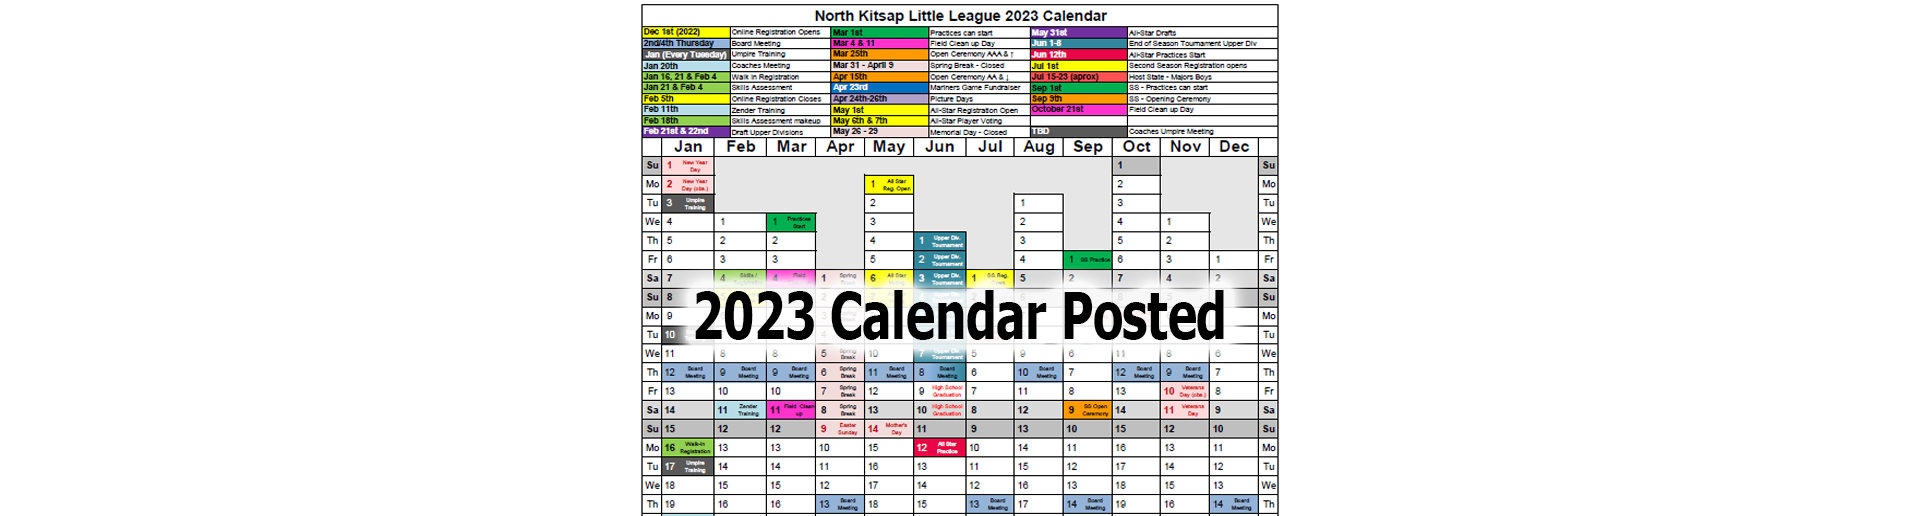 2023 NKLL Calendar